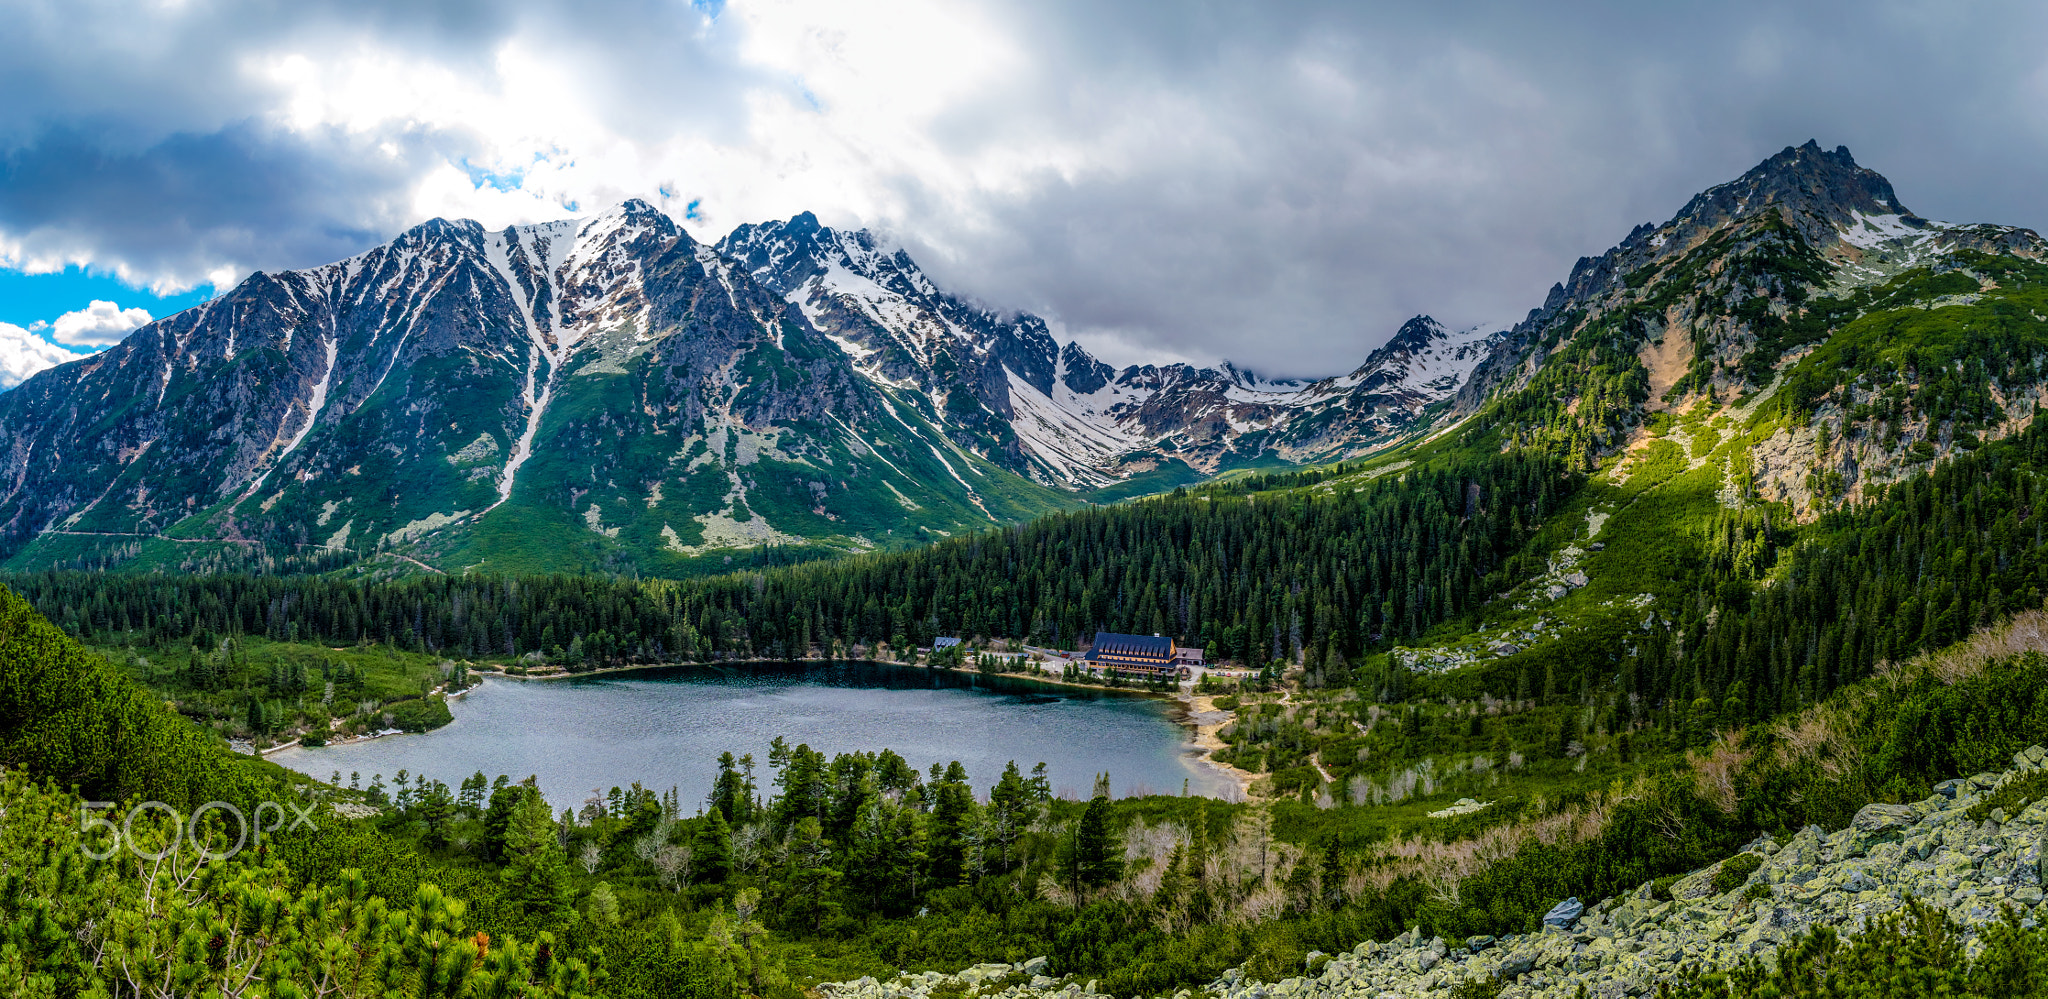 Lake in high mountains